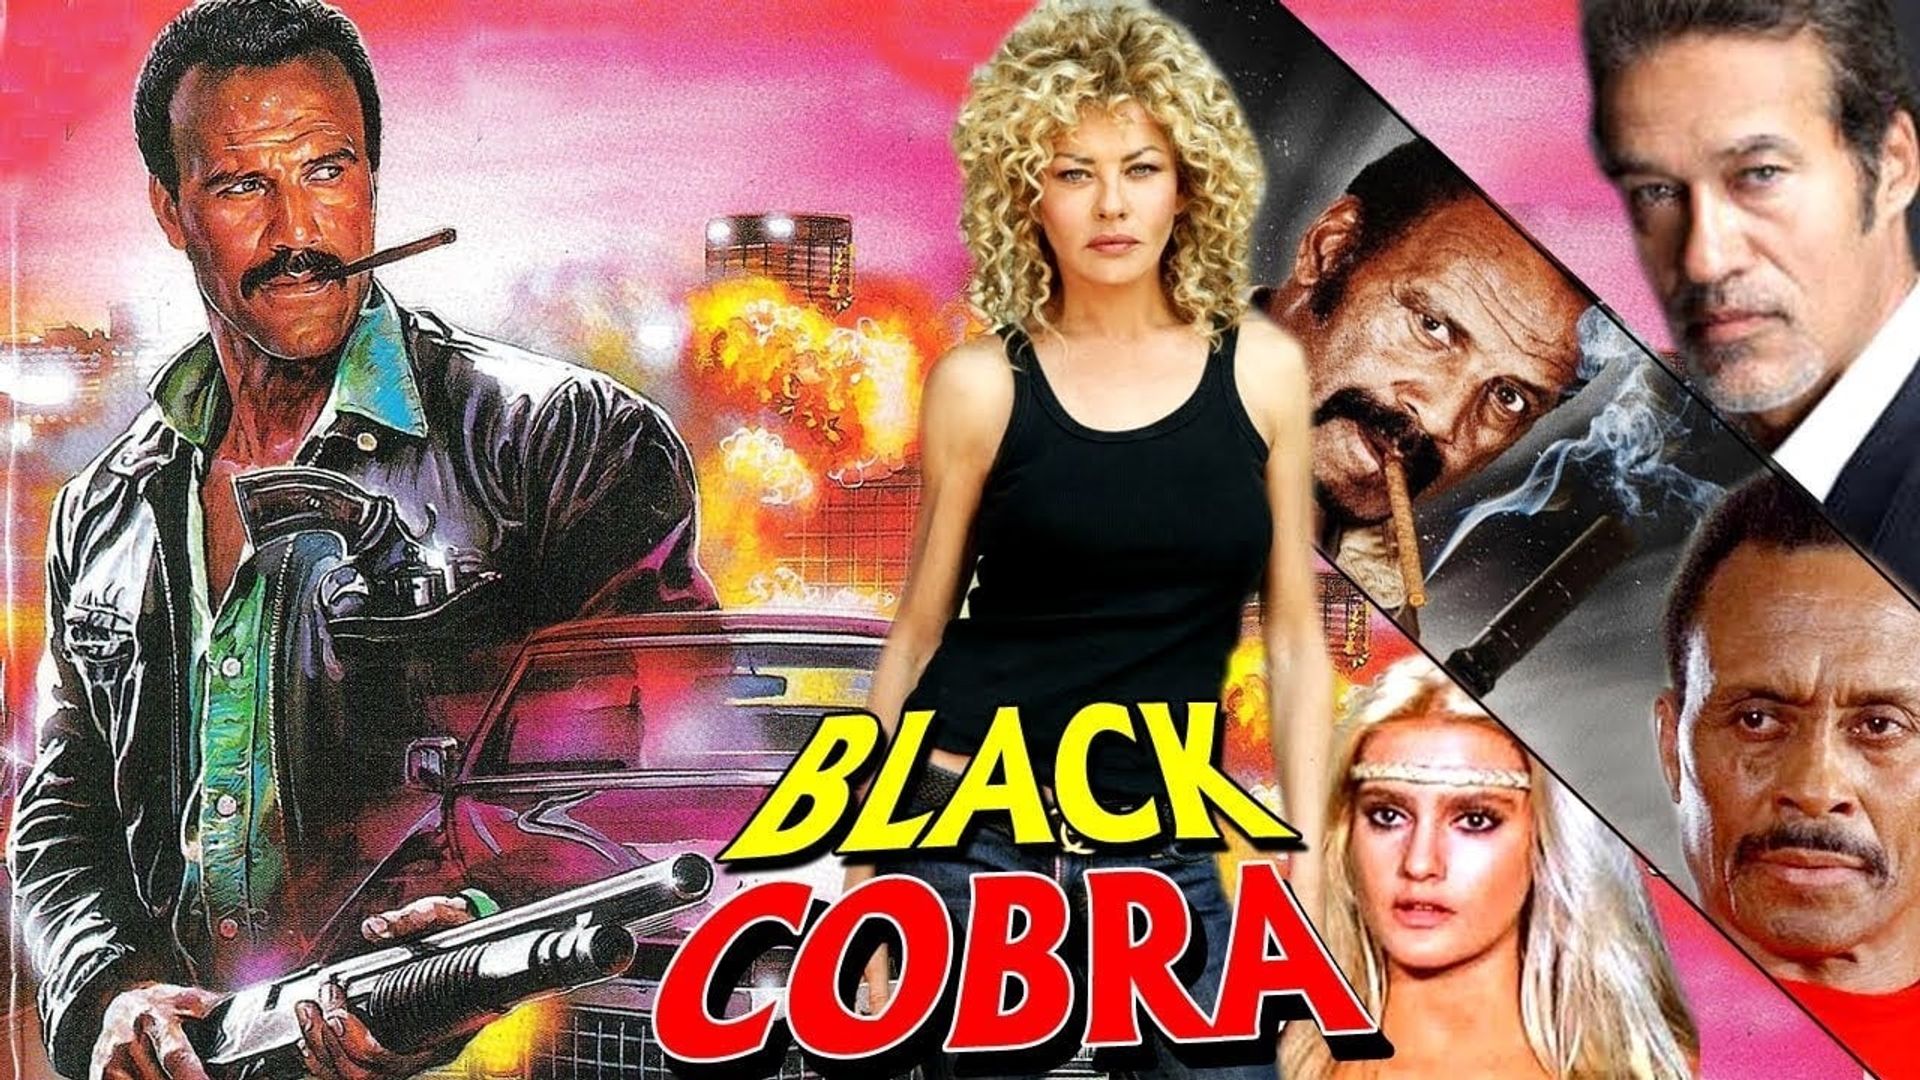 Cobra nero background